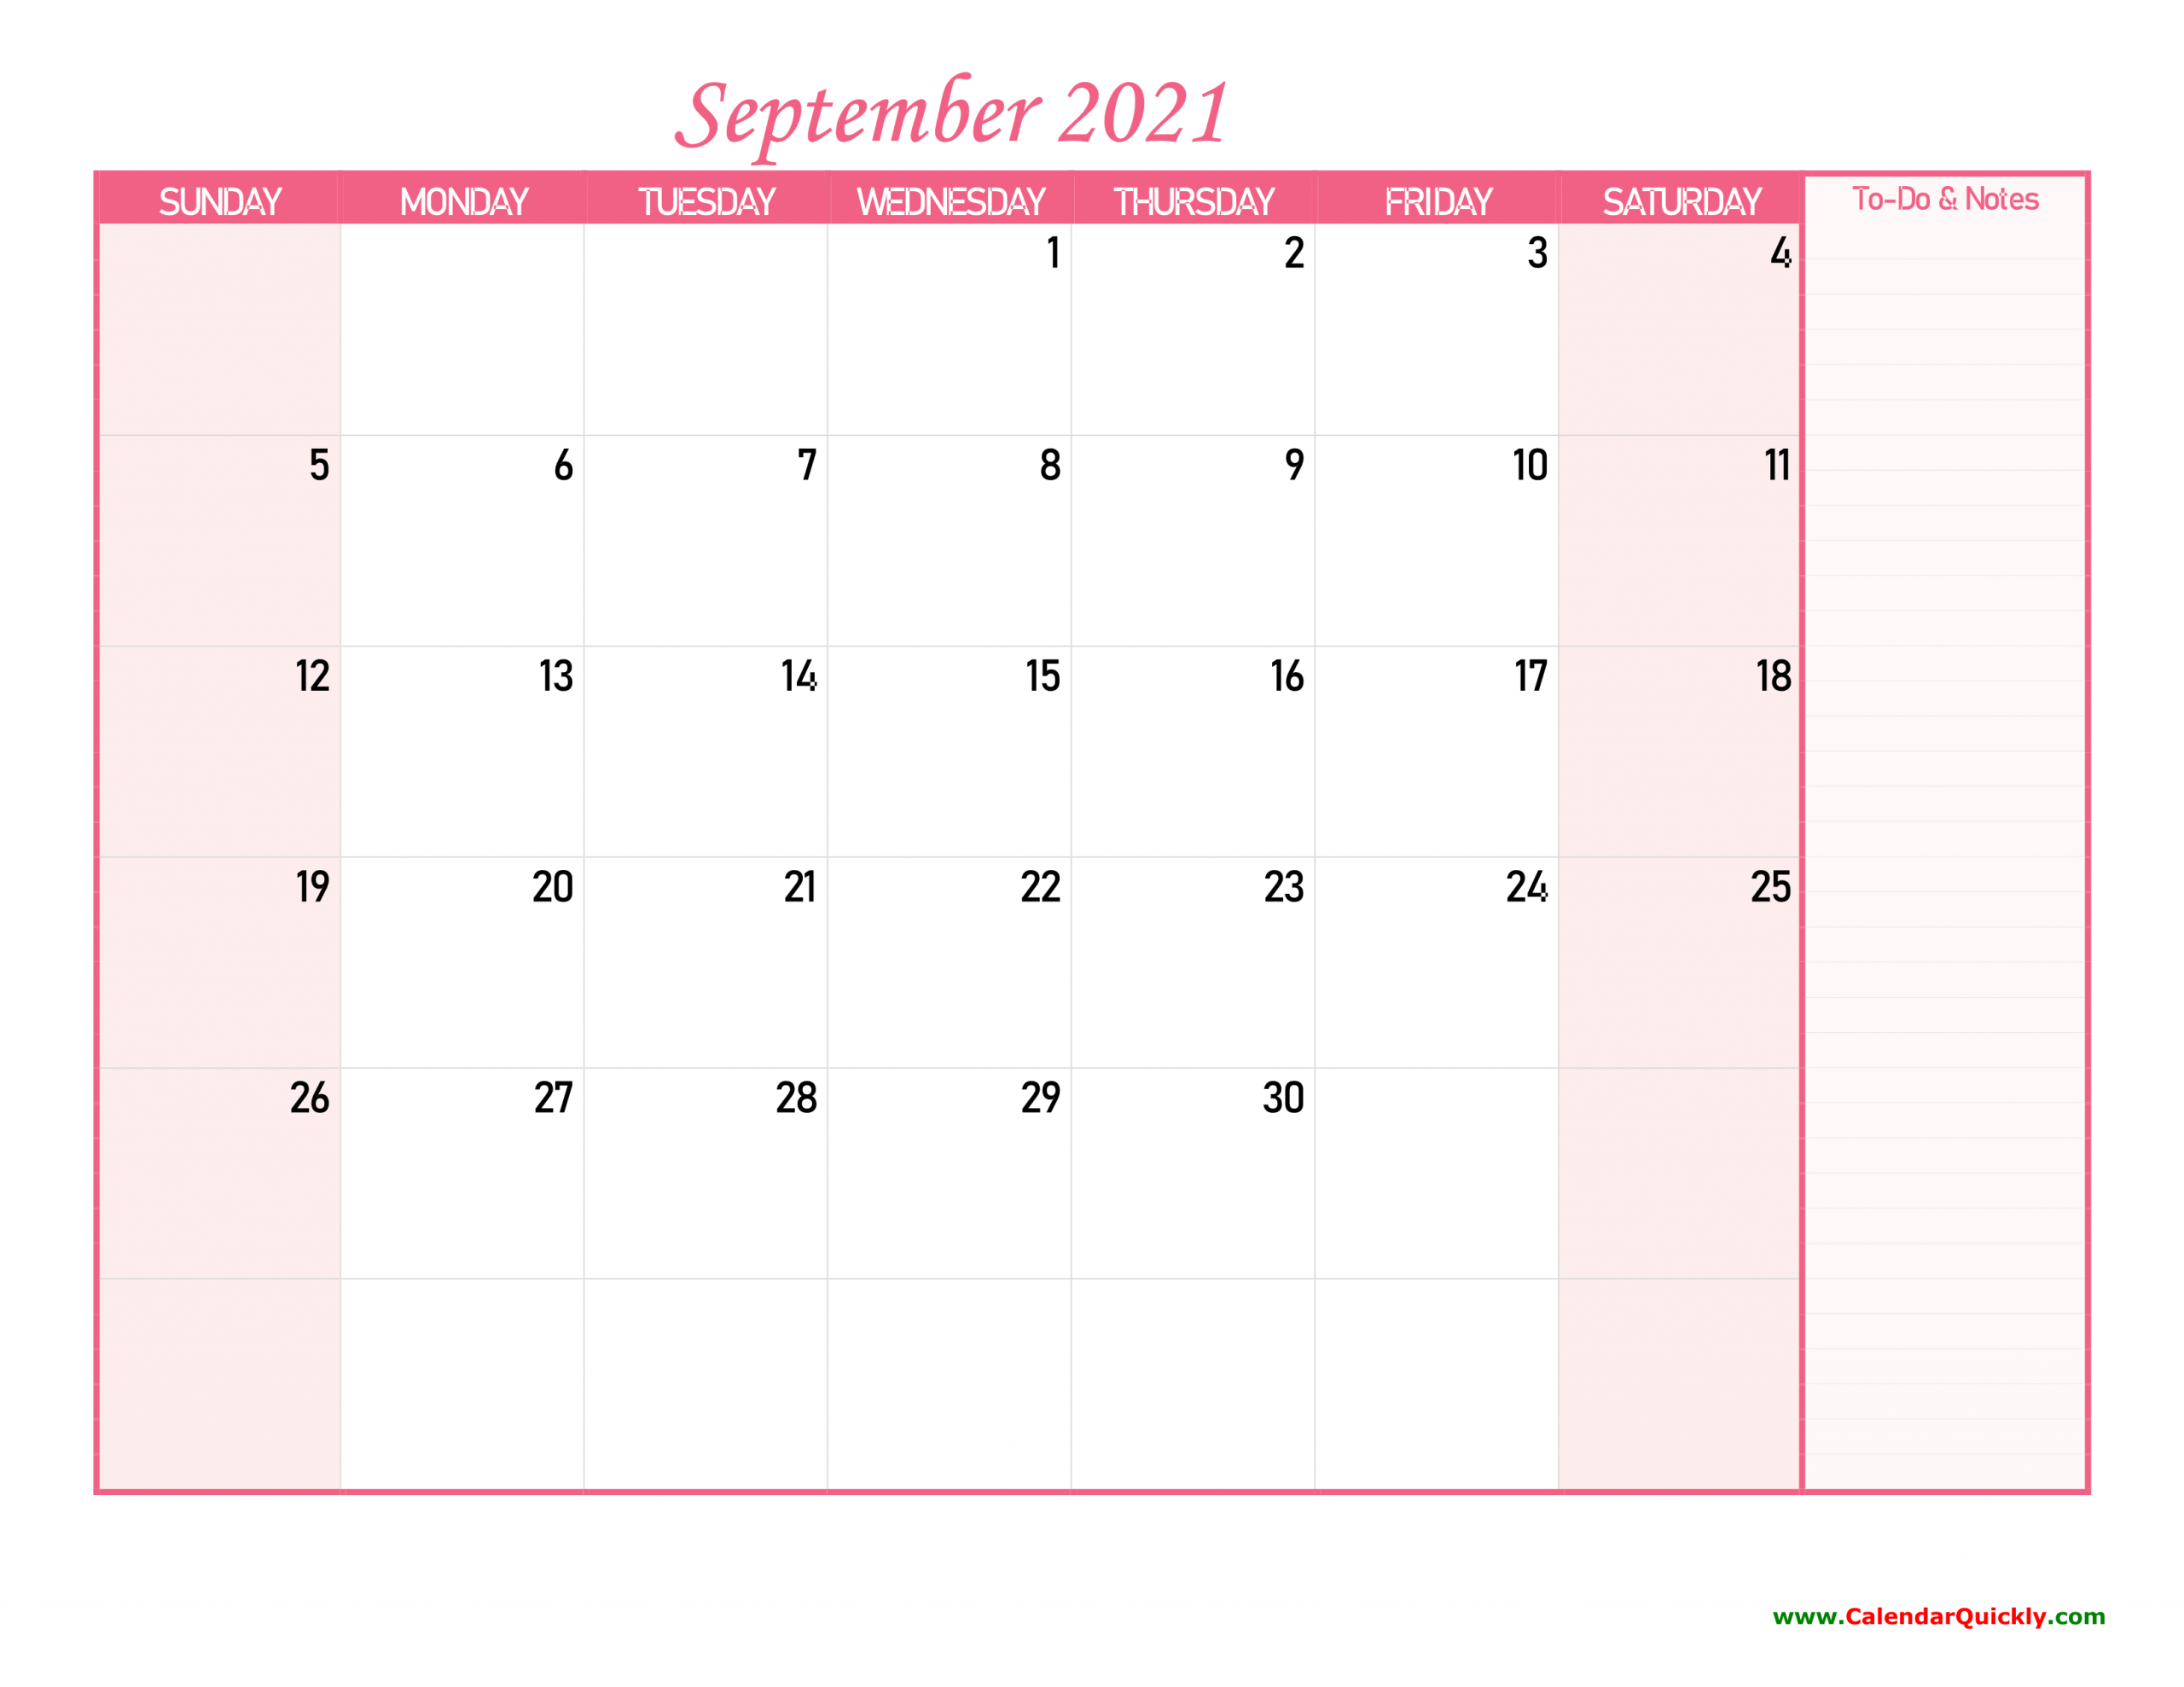 September Calendar 2021 With Notes Calendar Quickly